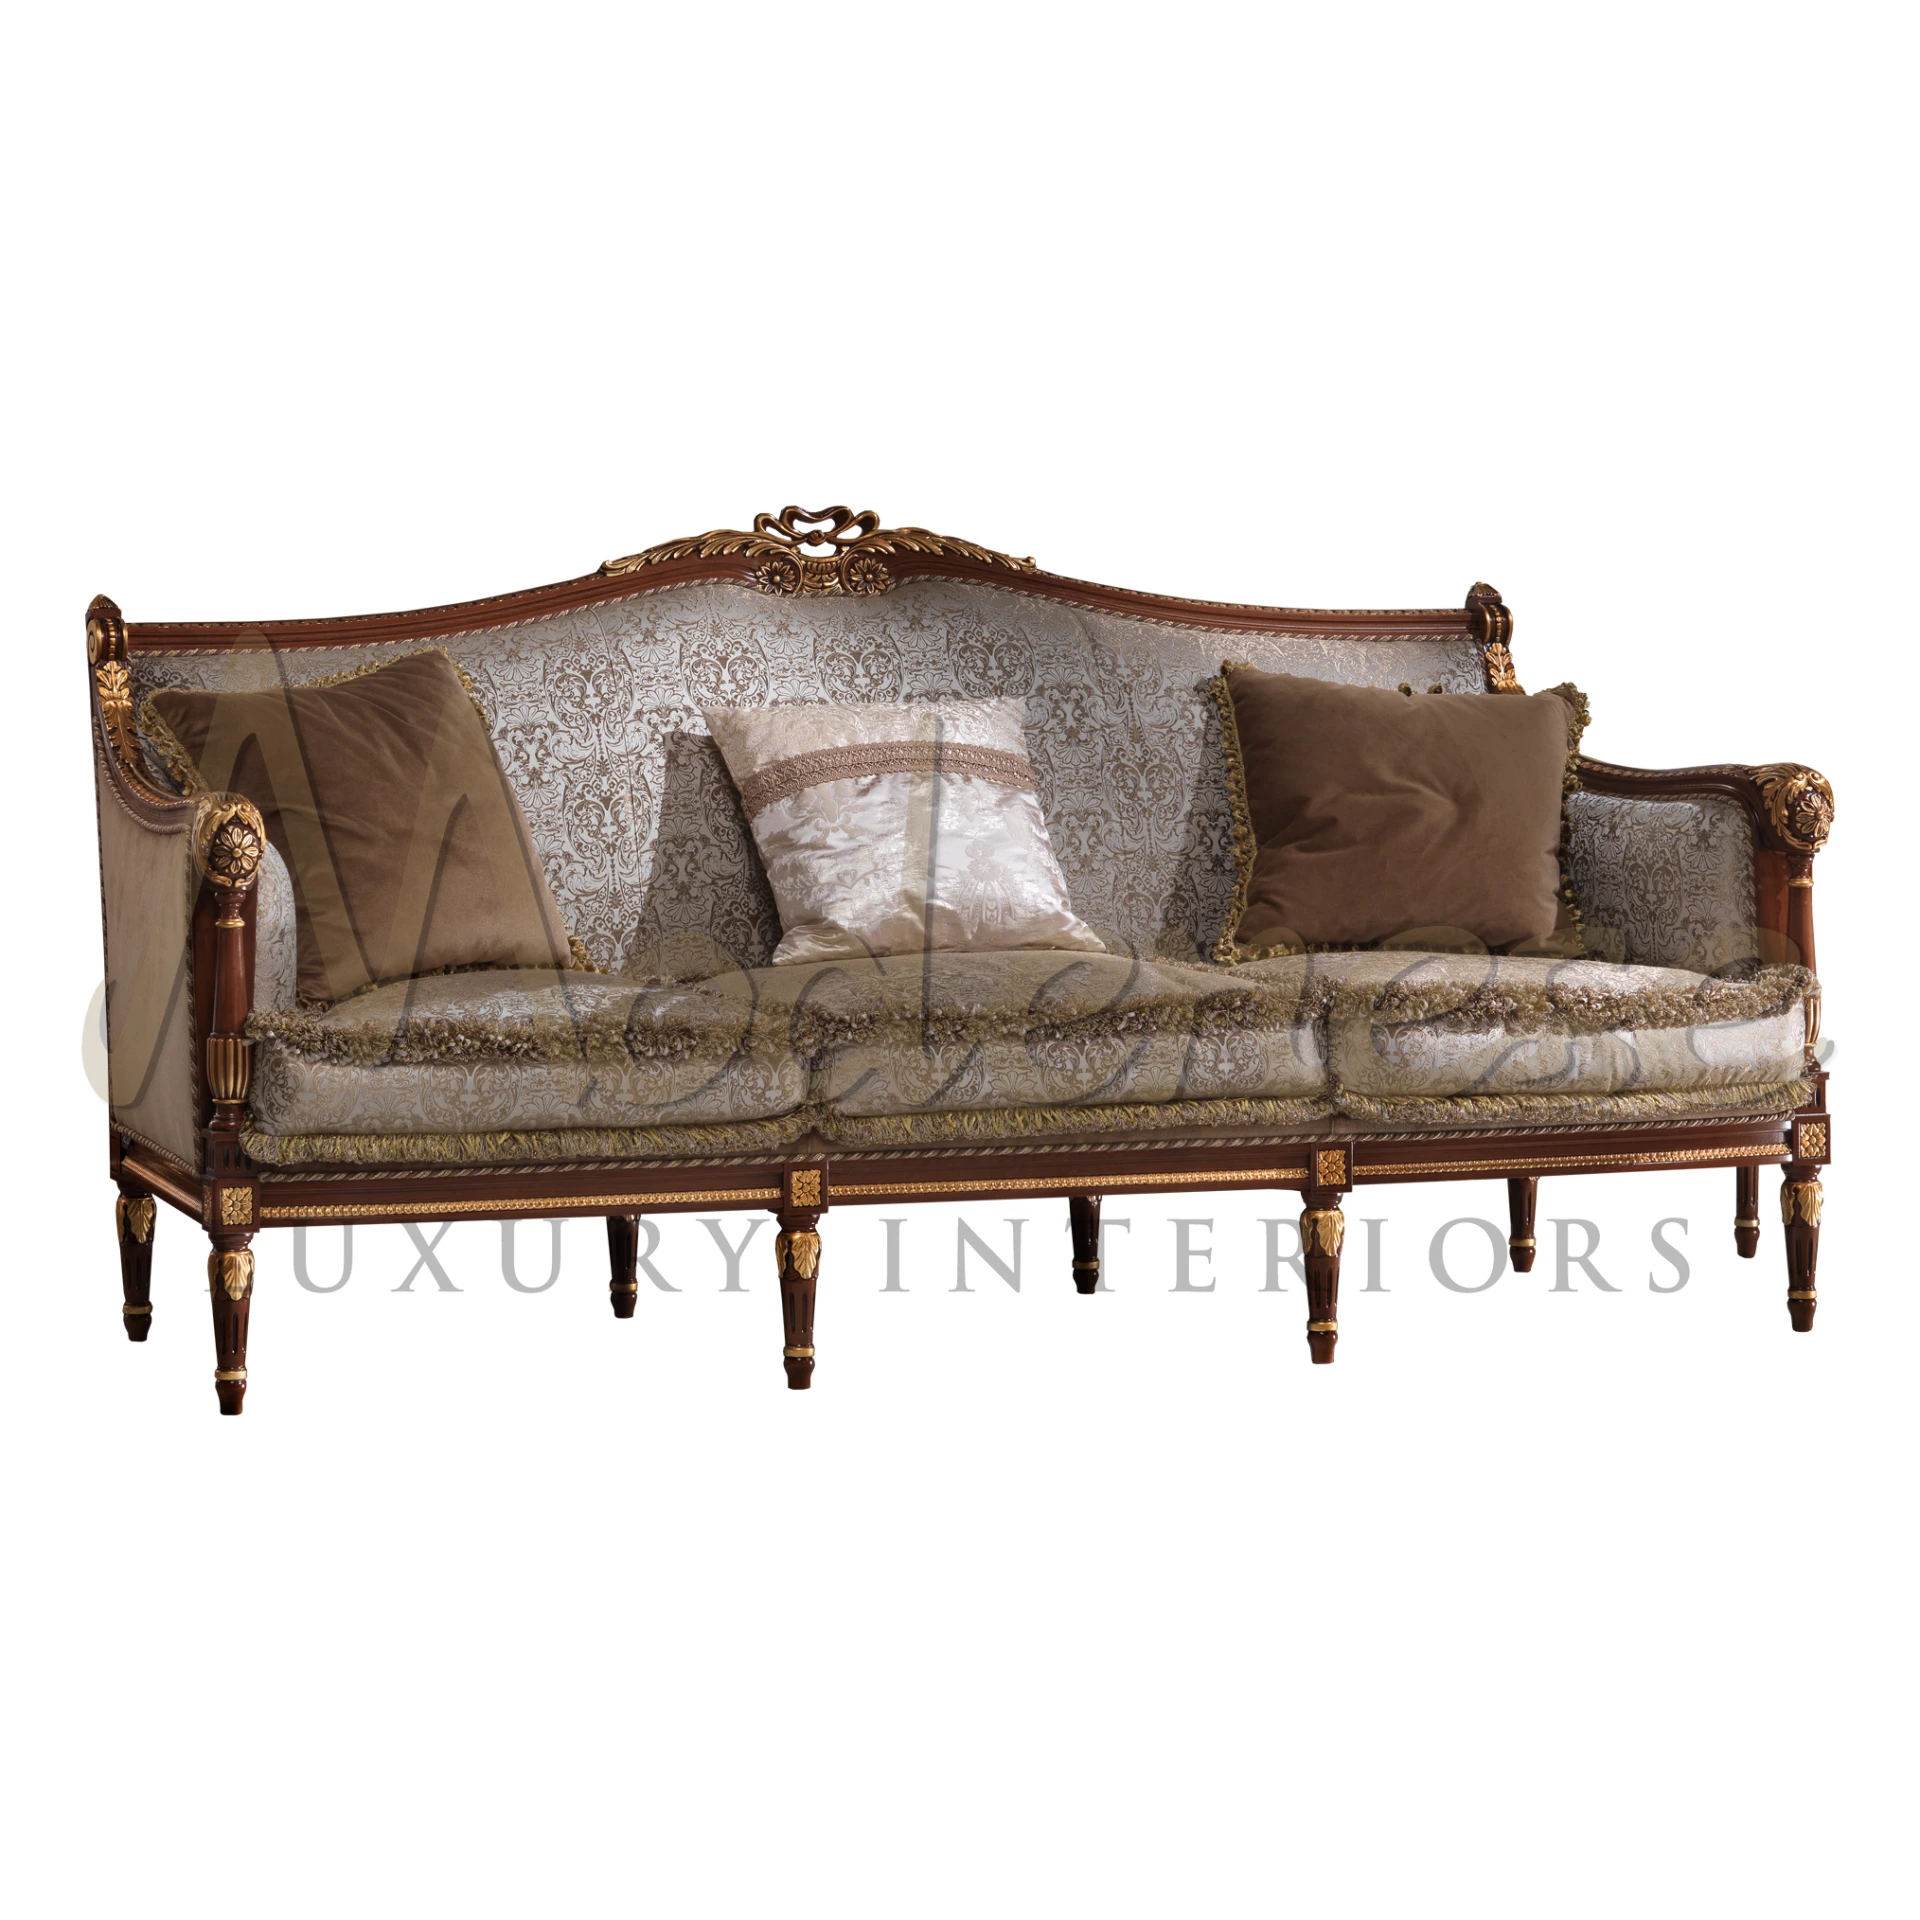 Opulent Handcarved Imperial Sofa: A Statement of Regal Splendor